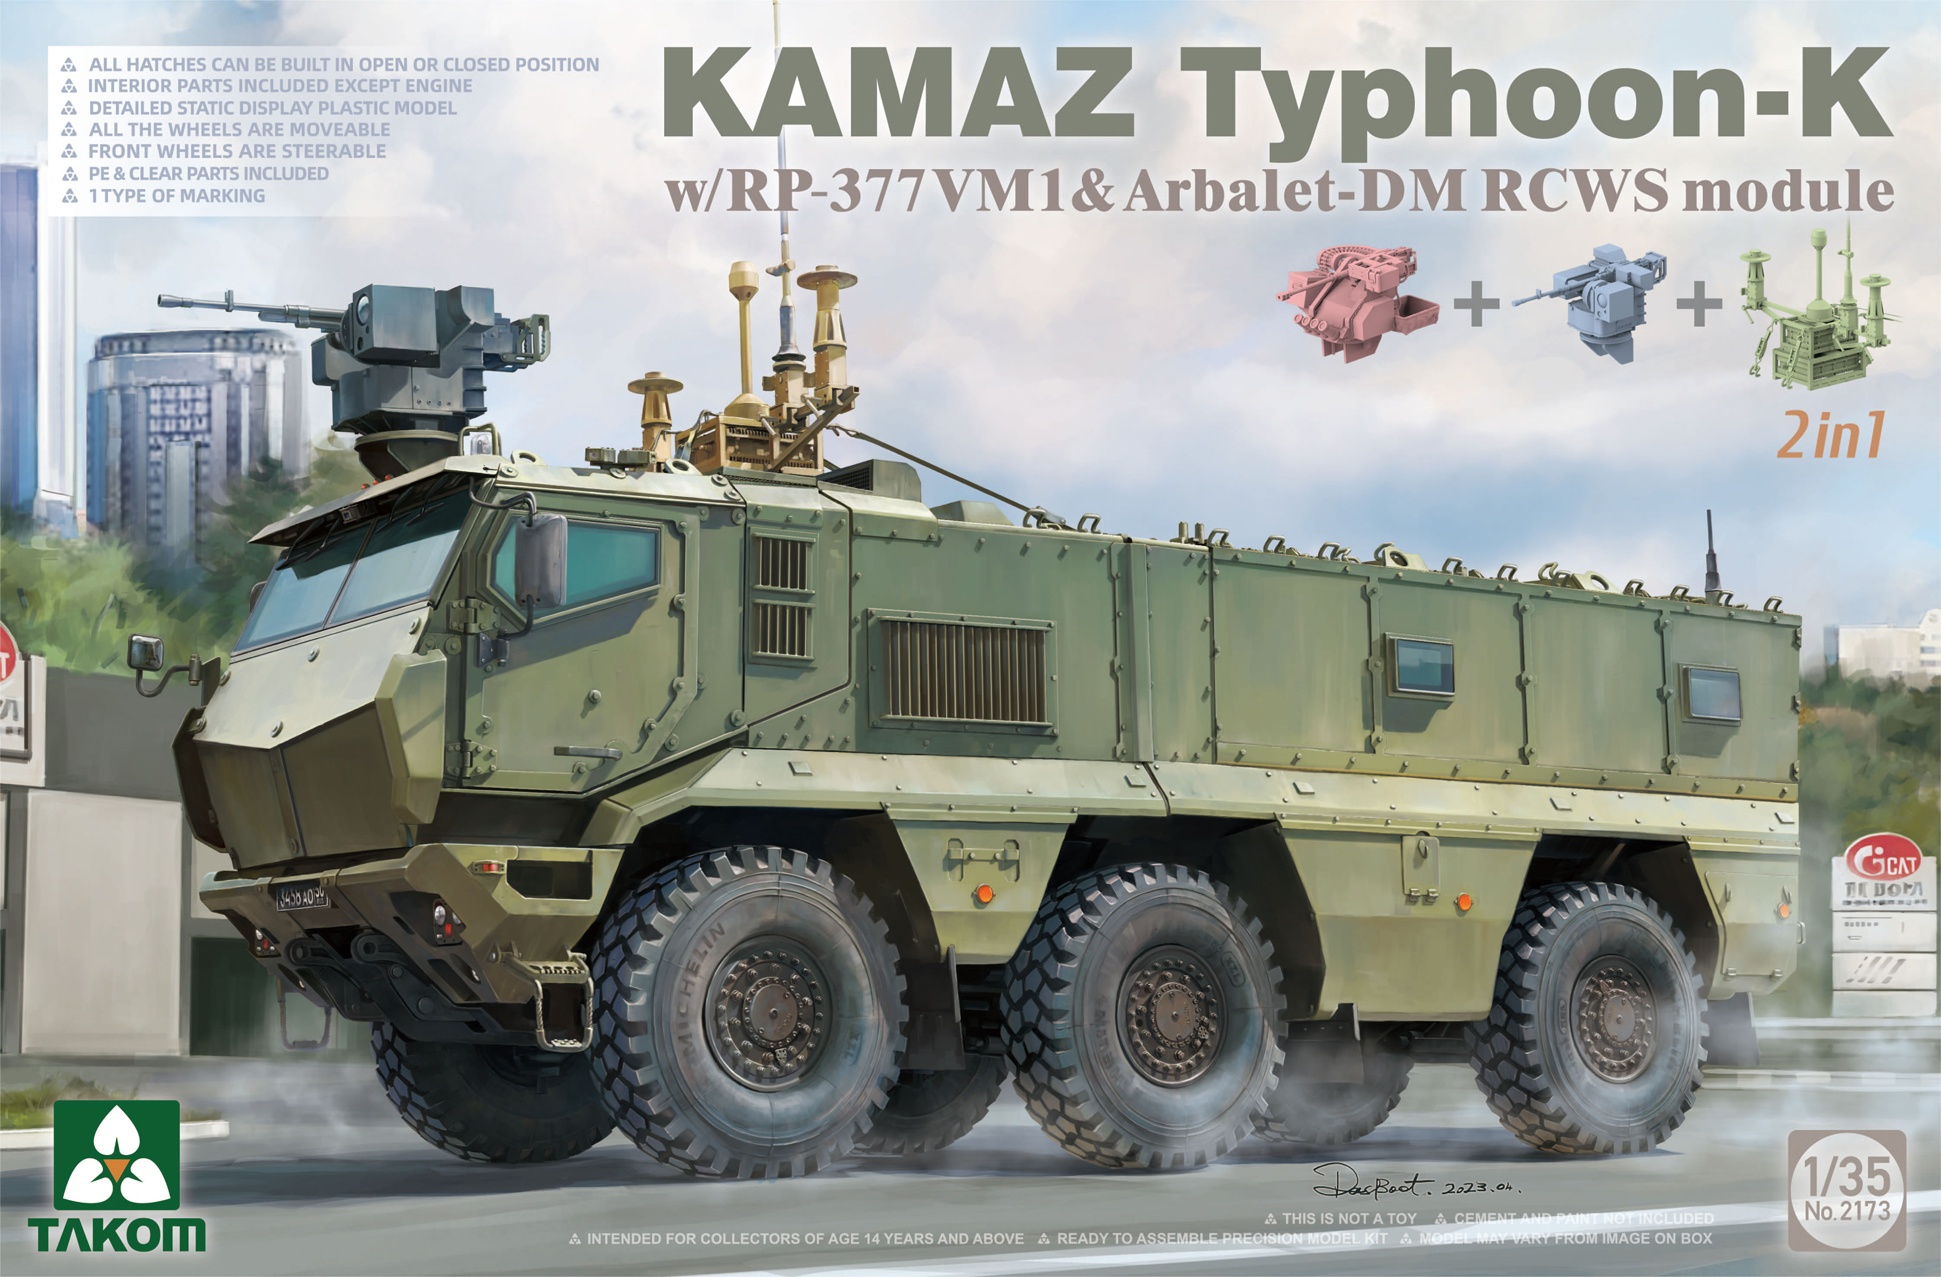 1/35 KAMAZ Typhoon-K w/ RP-377VM1 & Arbalet-DM RCWS module